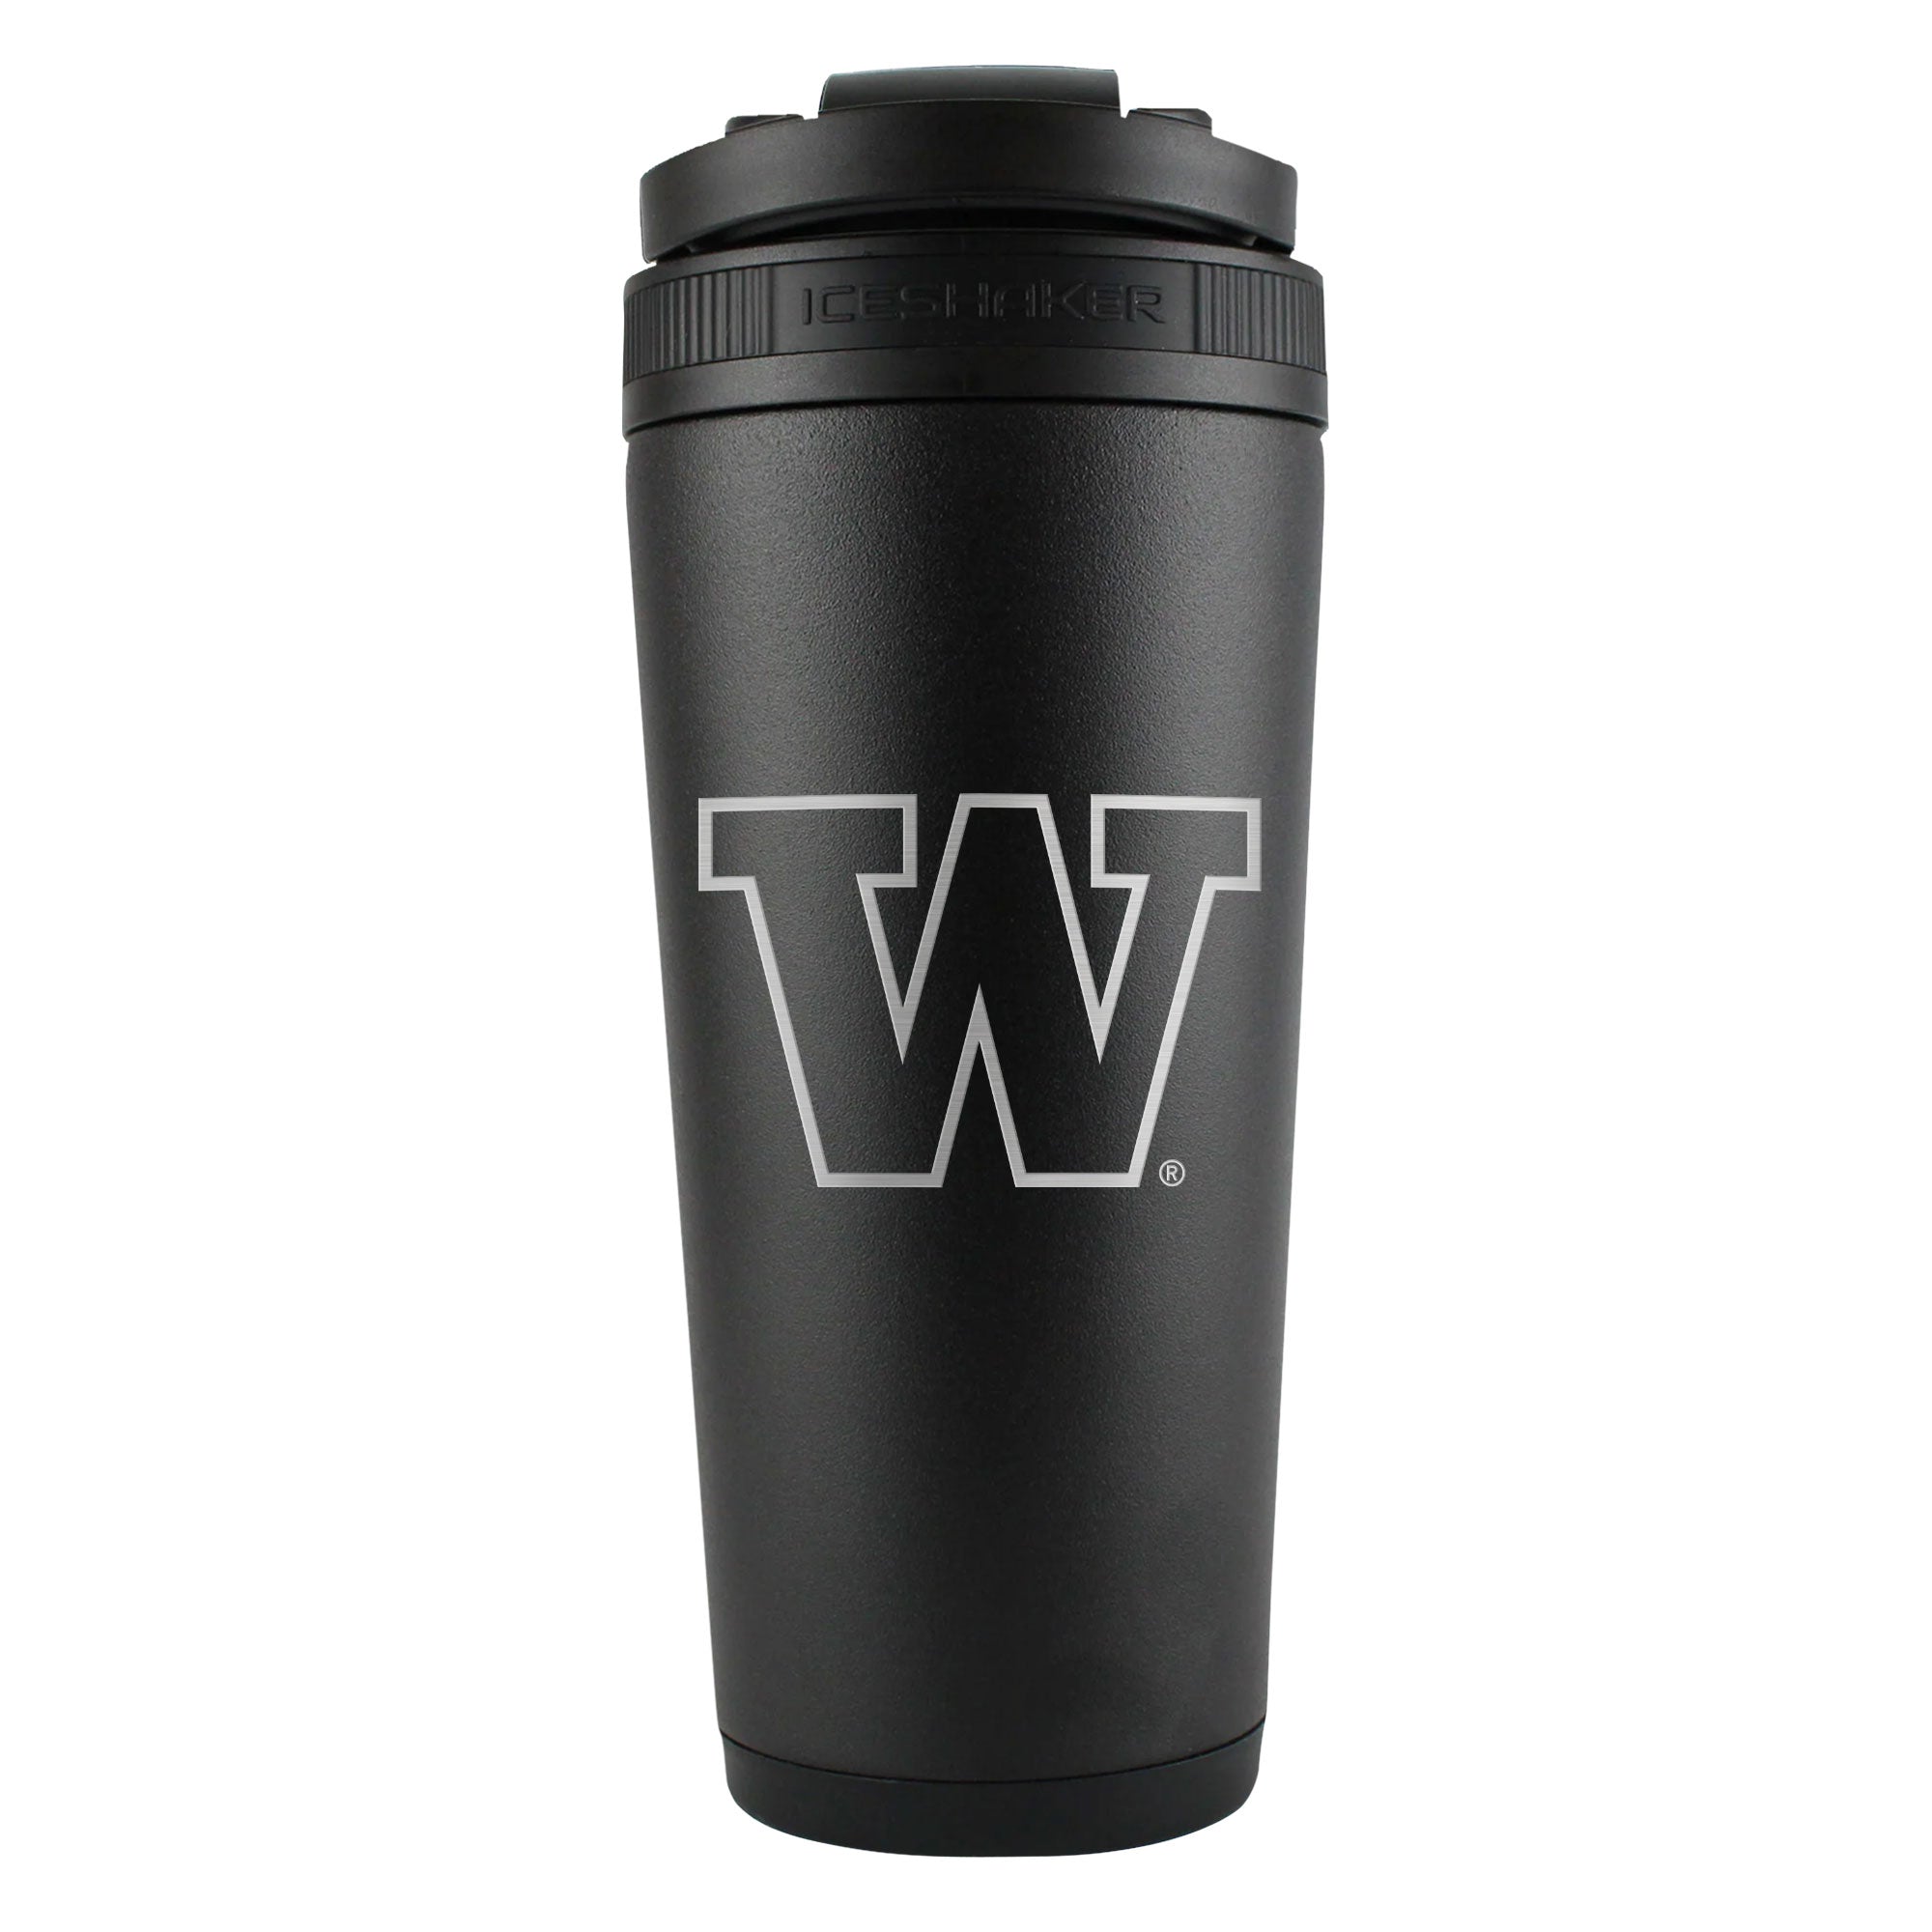 Officially Licensed University of Washington 26oz Ice Shaker - Black